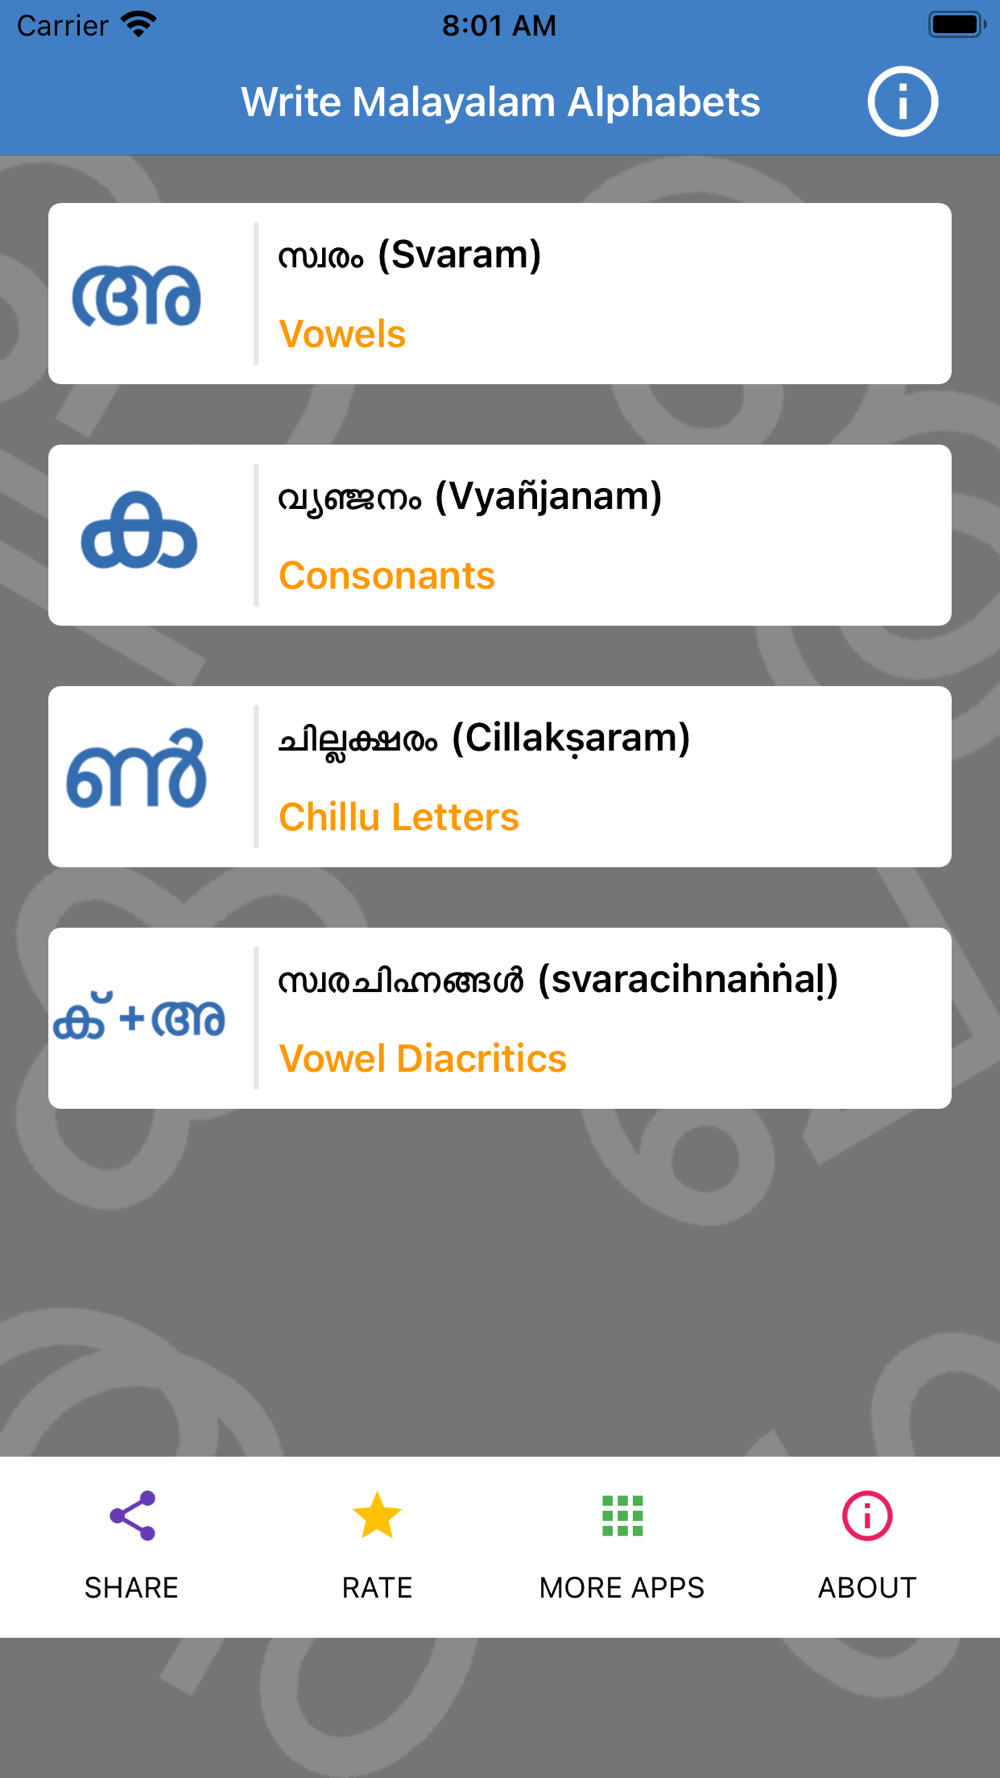 Write Malayalam Alphabets Free Download App for iPhone - STEPrimo.com